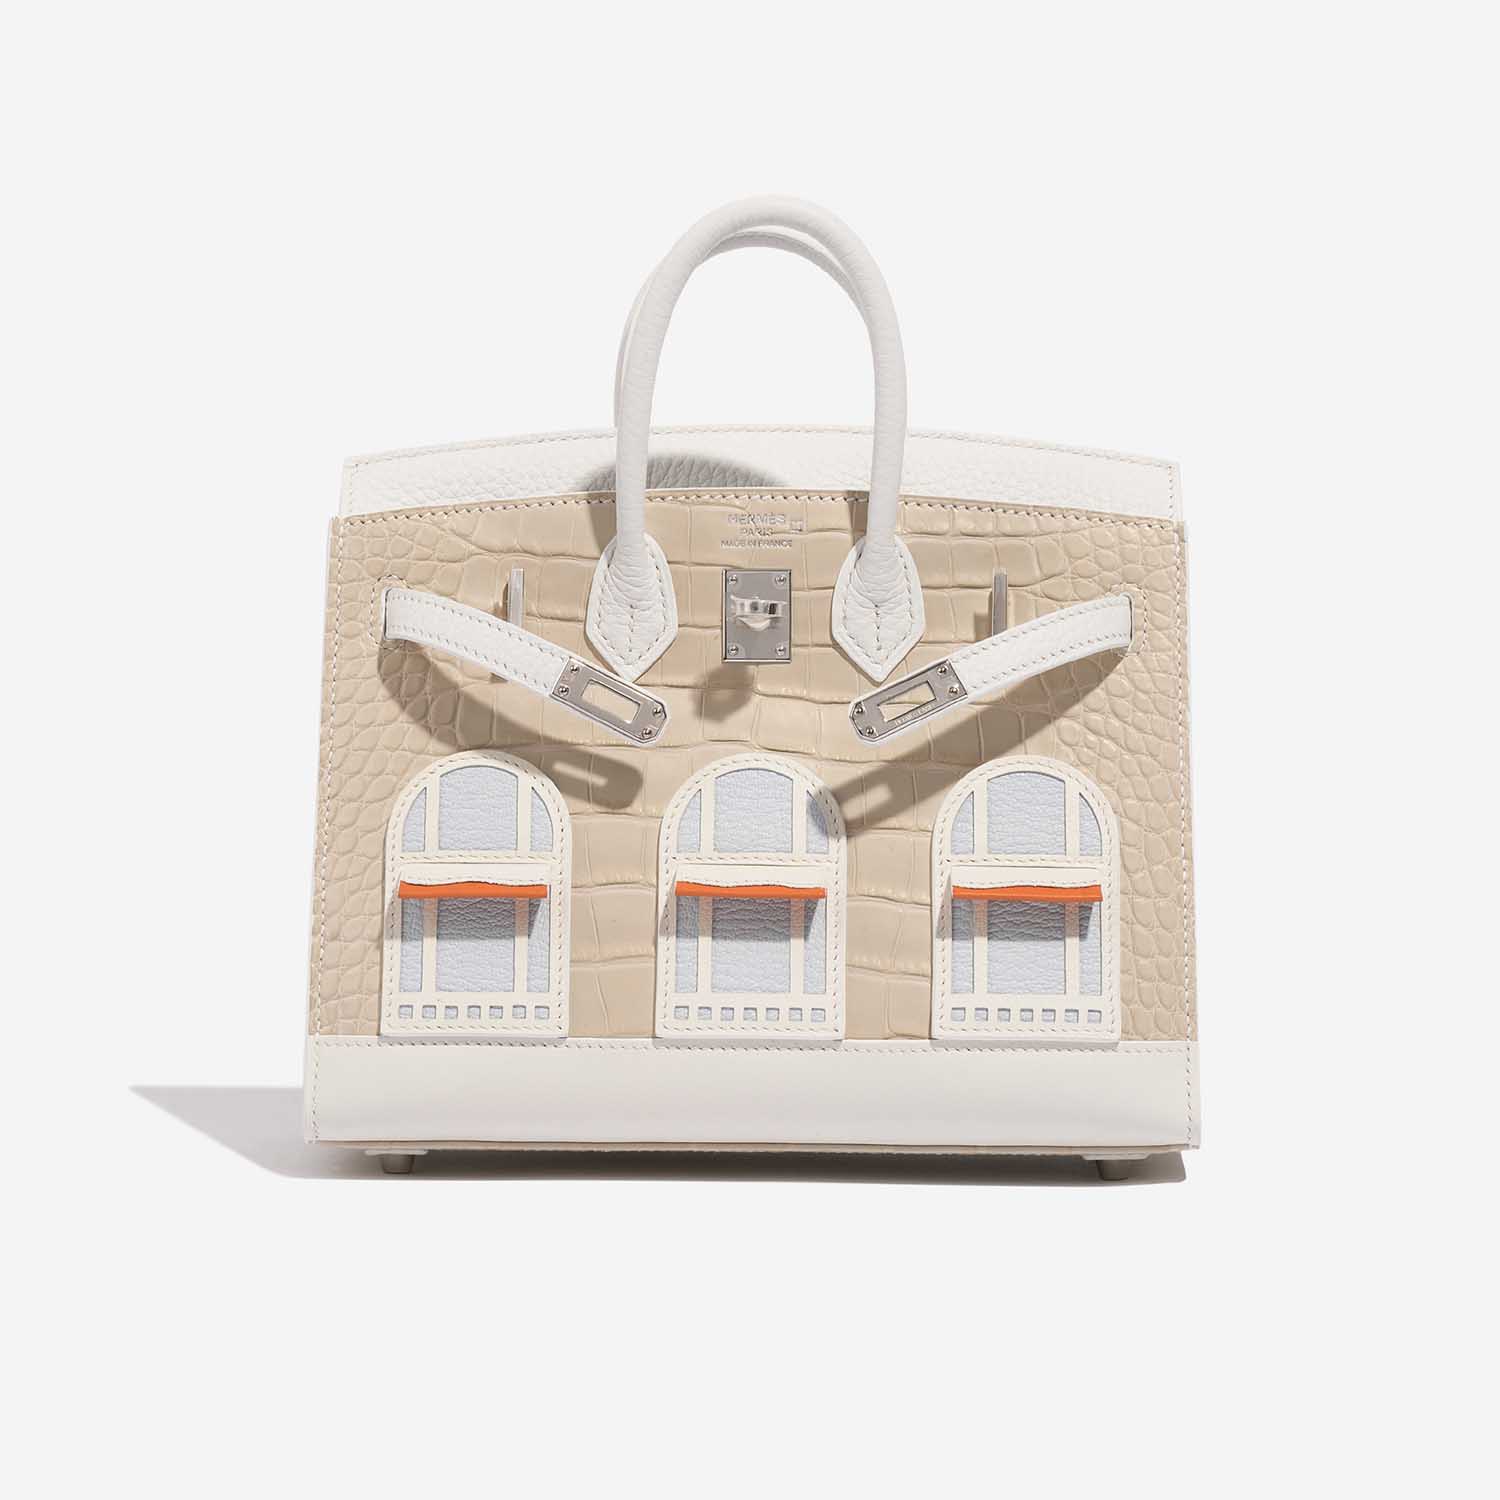 Pre-owned Hermès bag Birkin Faubourg 20 Snow Matte Alligator / Togo / Epsom / Swift White / Beton / Orange H / Blue Brume / Craie Beige, White Front Open | Sell your designer bag on Saclab.com